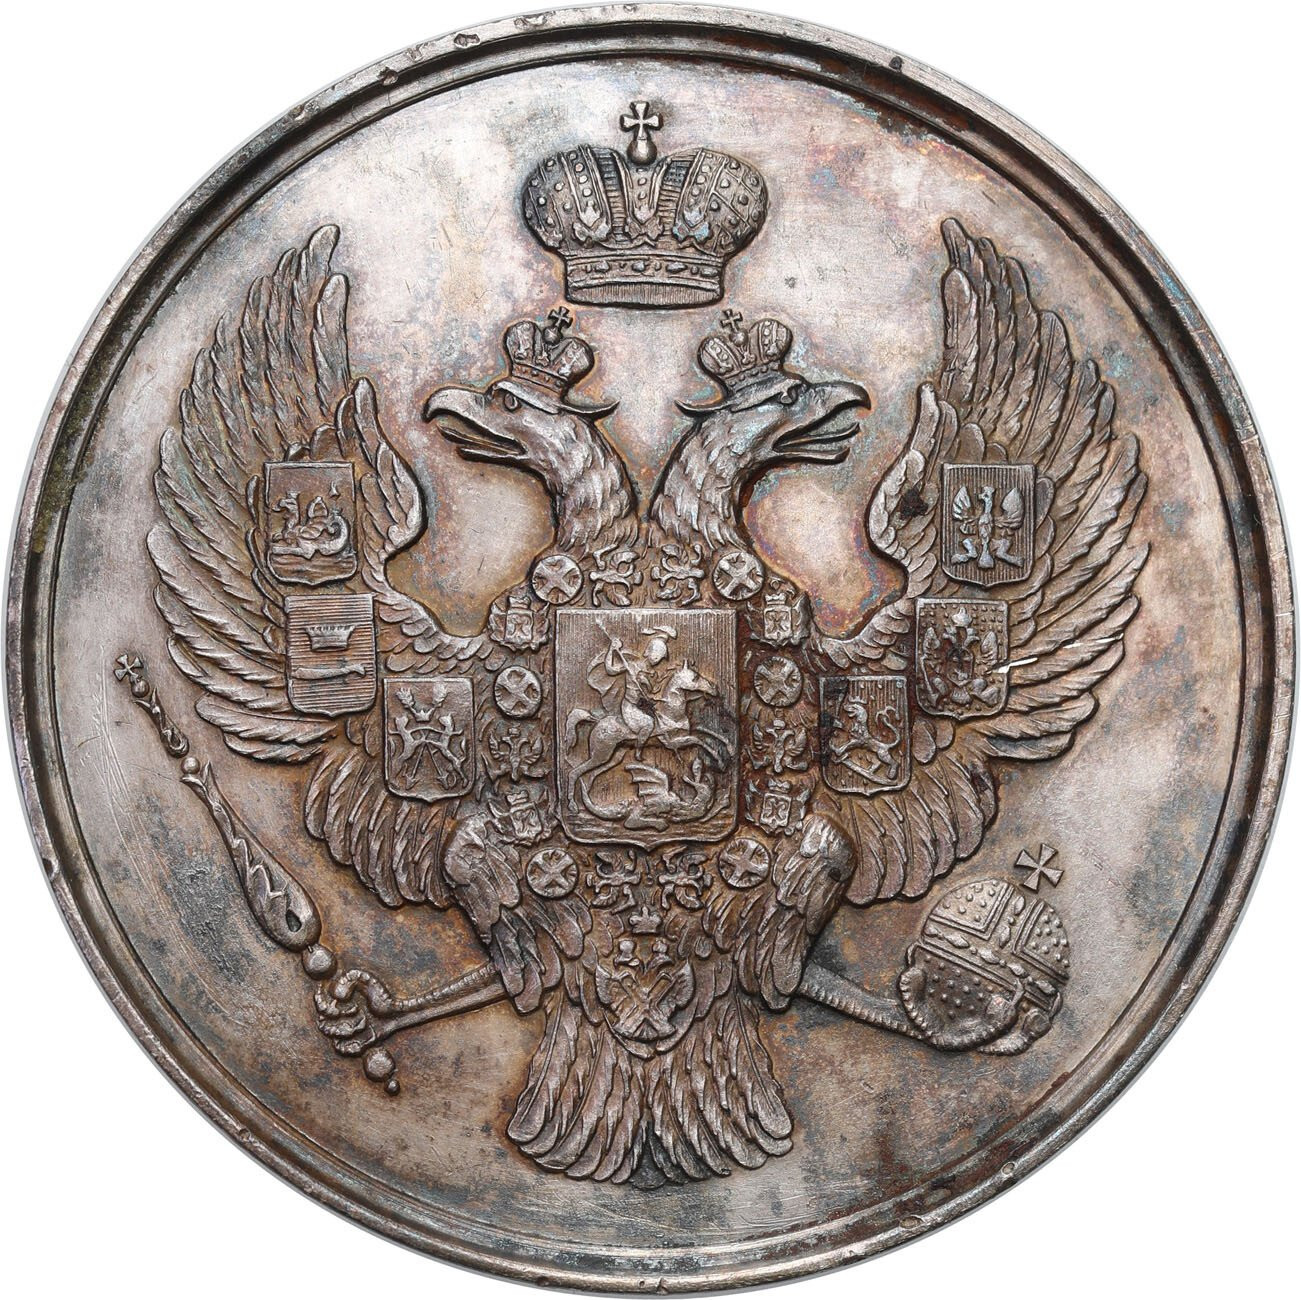 Rosja, Mikołaj I. Medal nagrodowy za naukę, gimnazjalny (1835), srebro